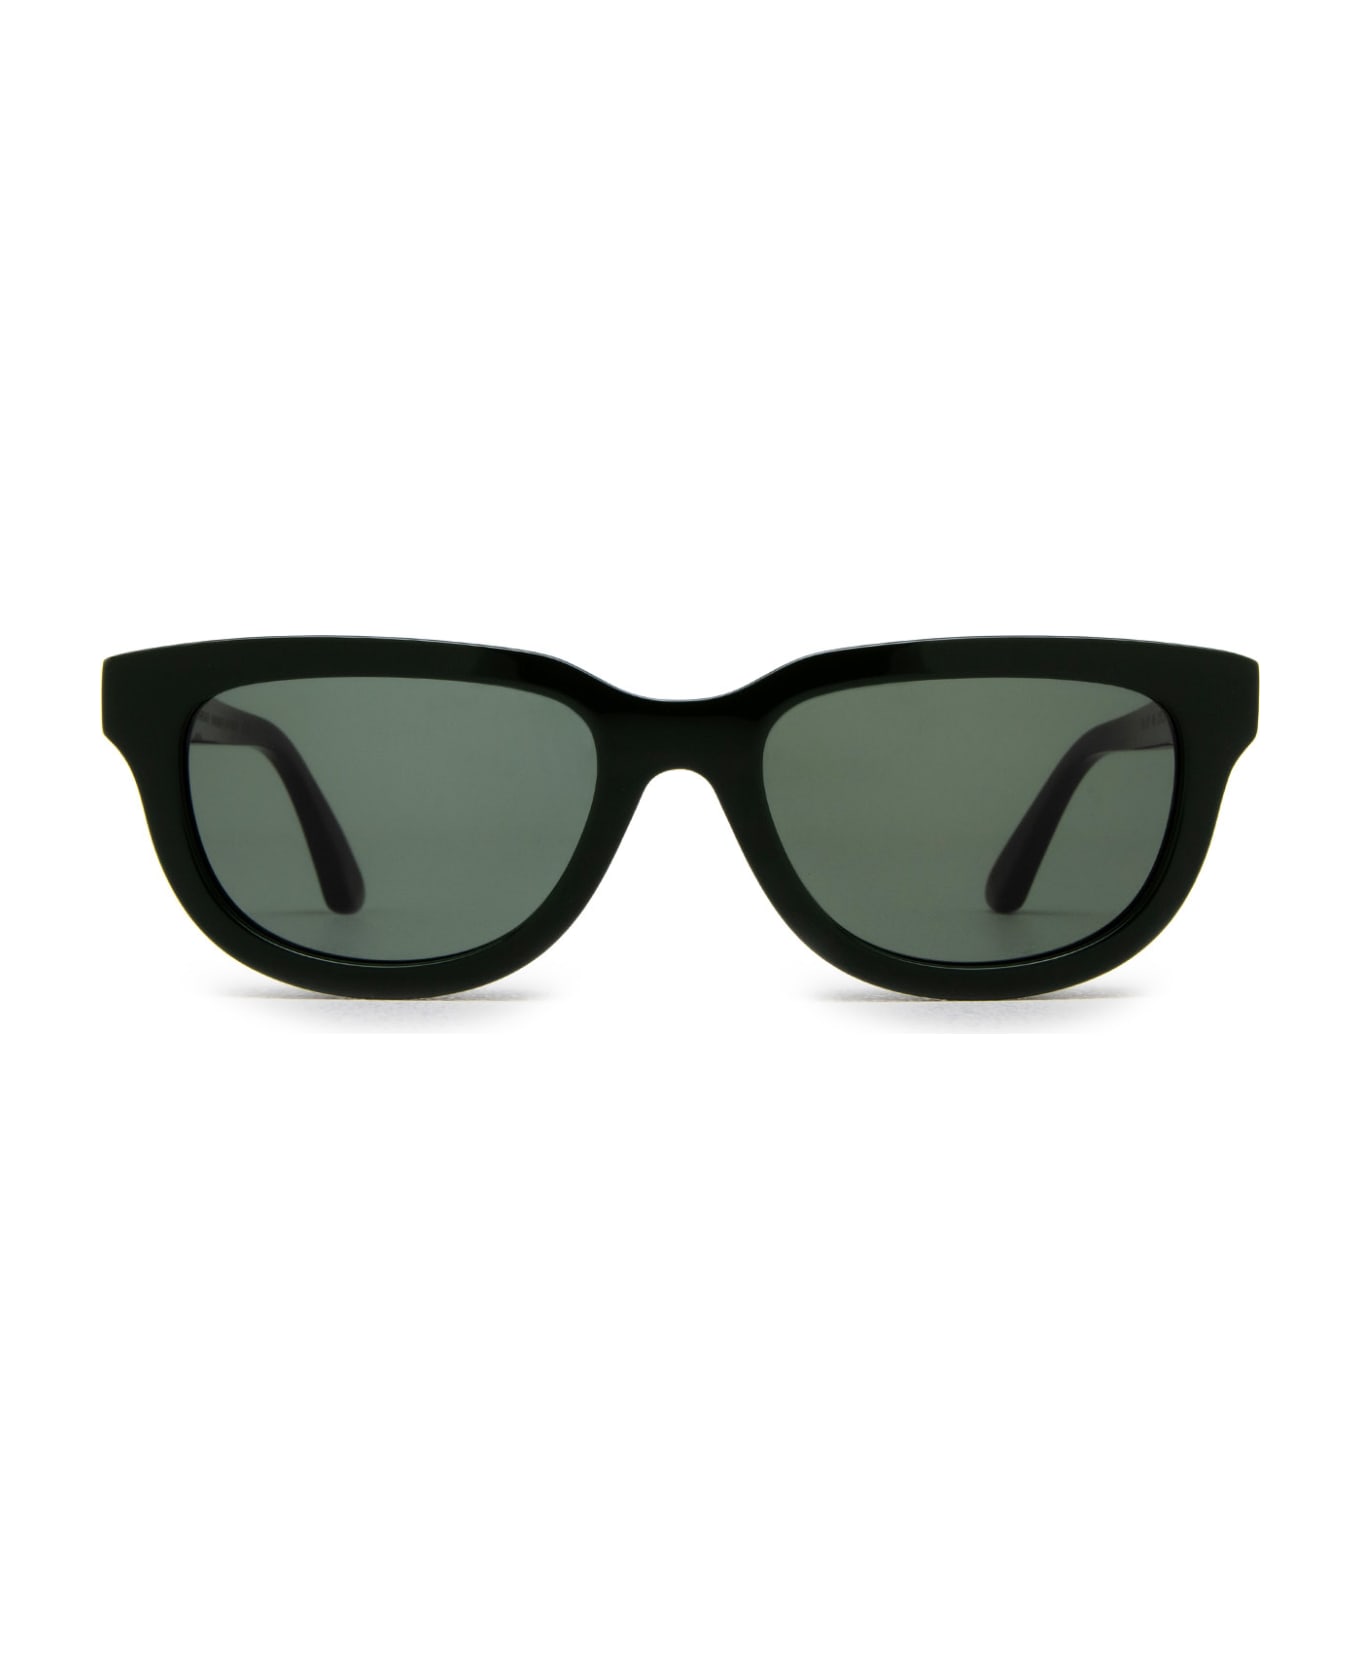 Huma Lion Green Sunglasses - Green サングラス